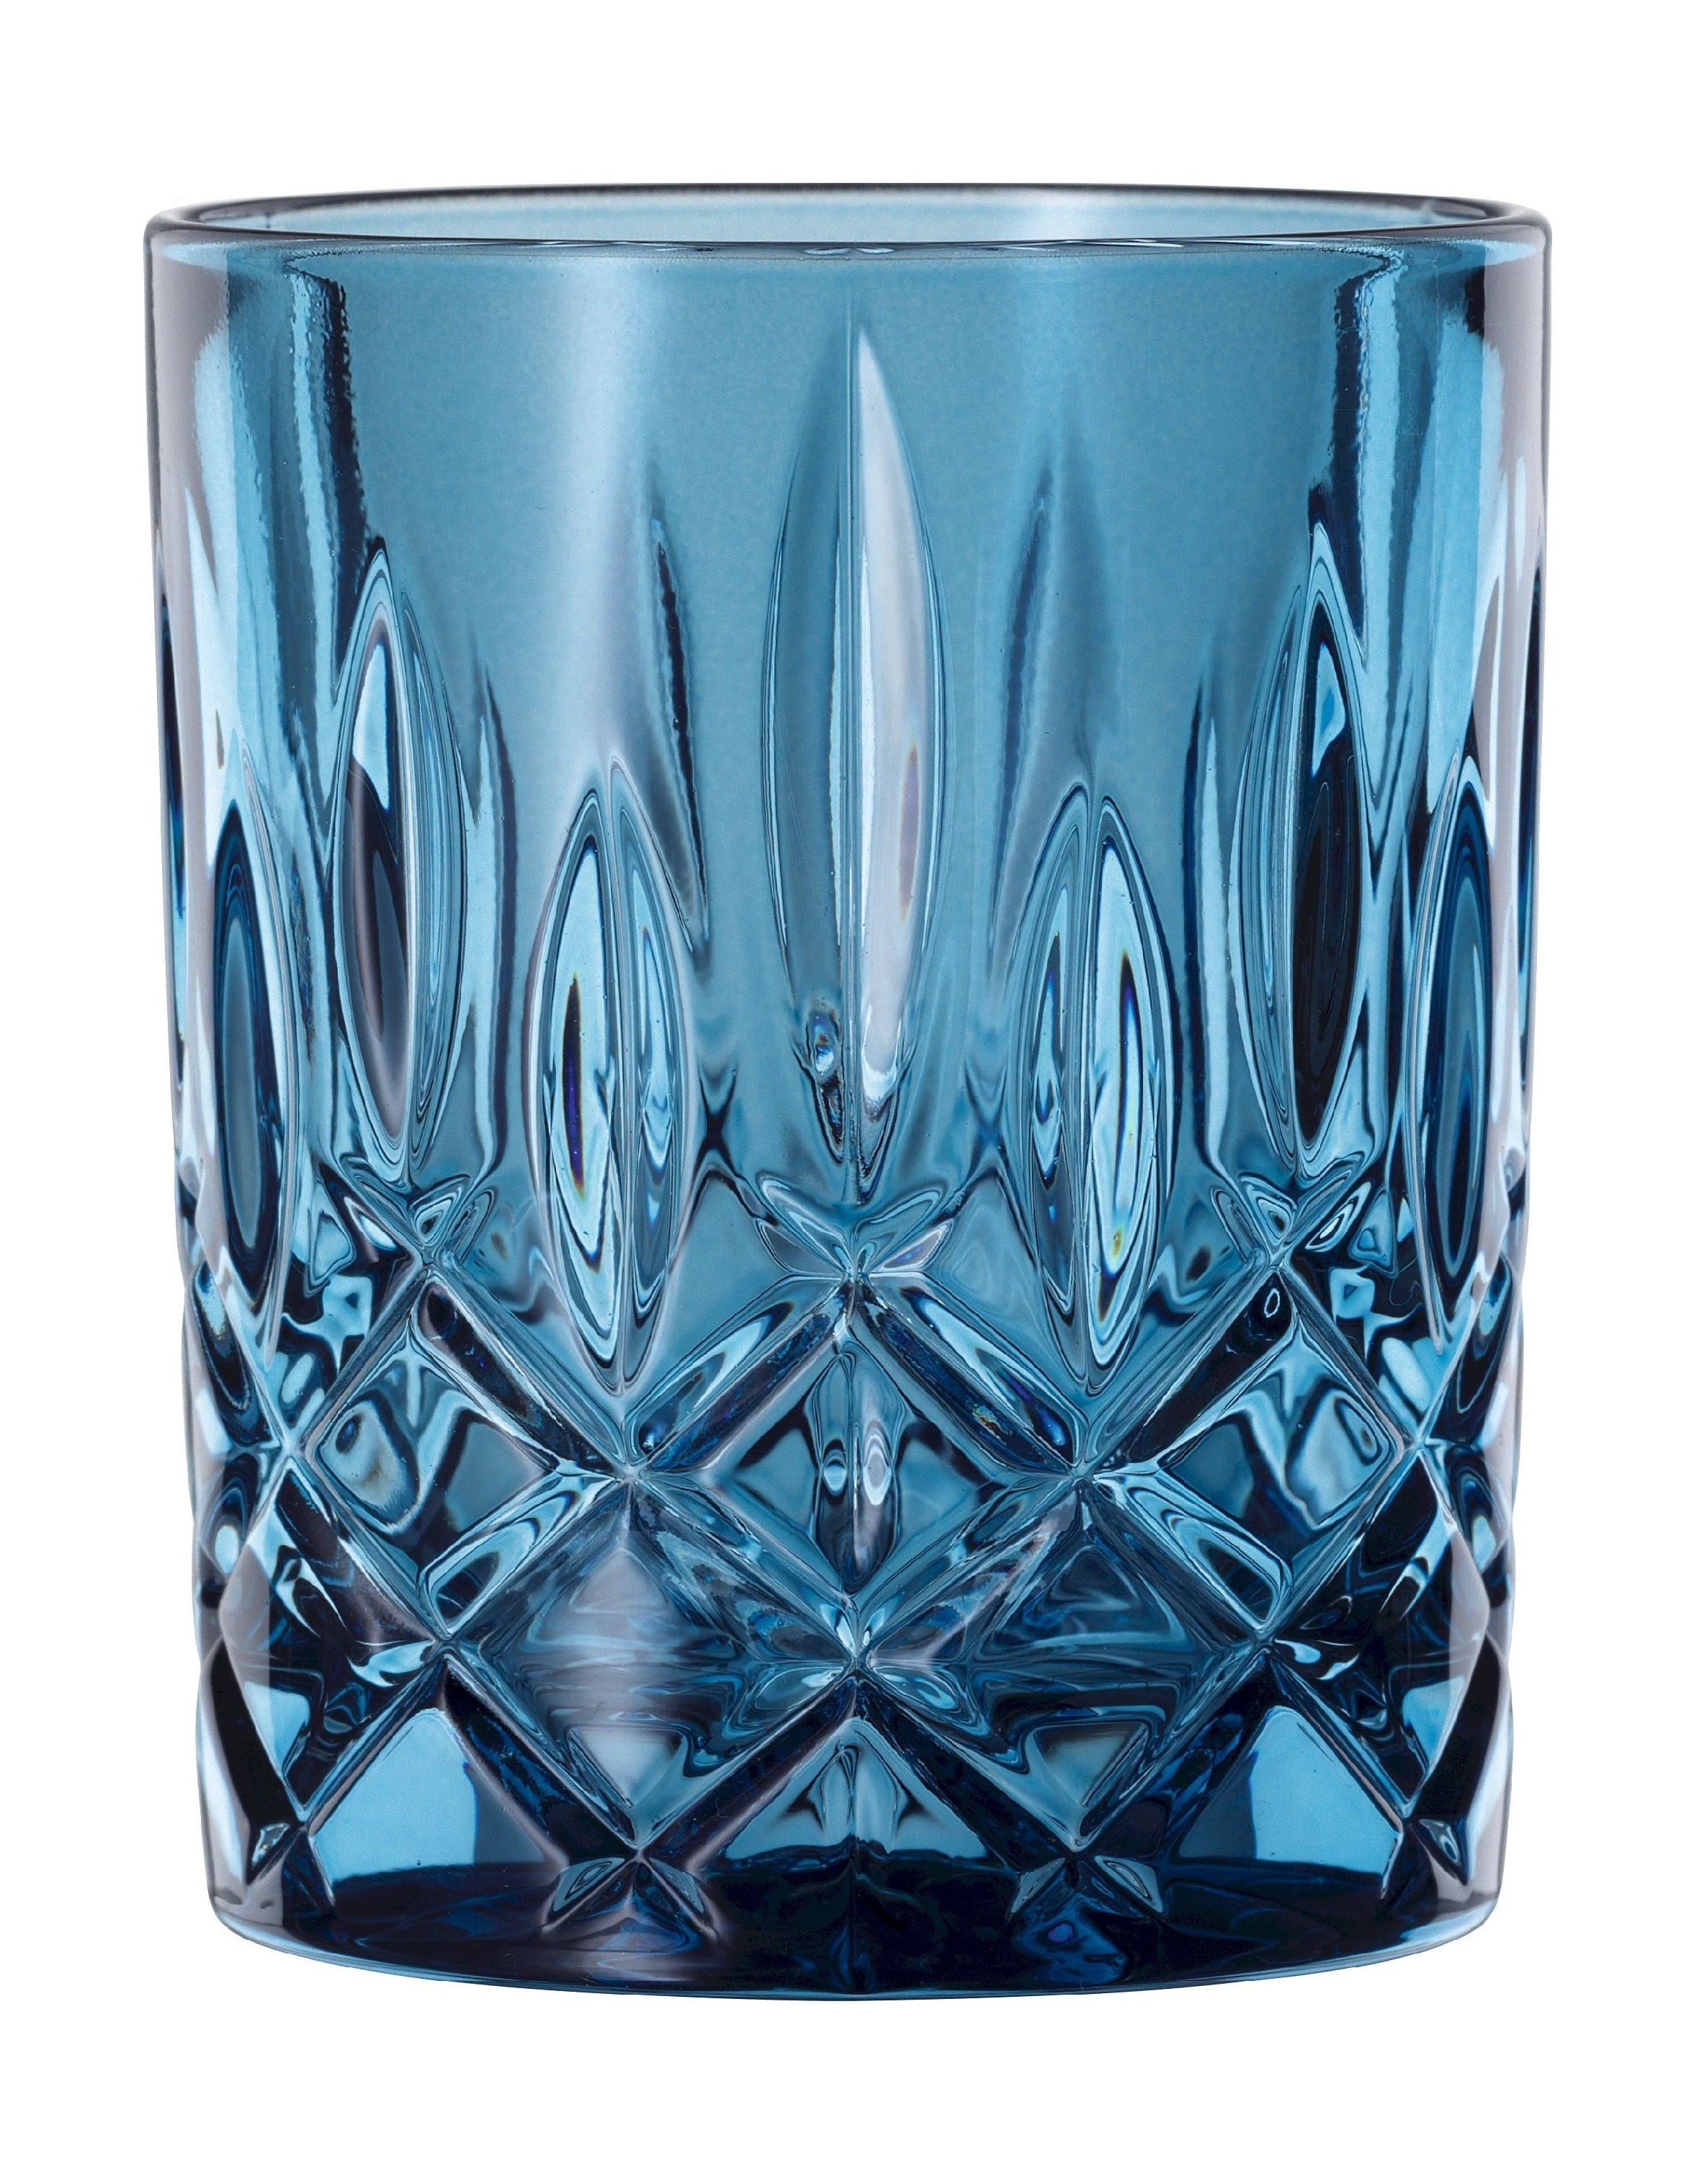 Nachtmann Noblesse Whisky Glass Vintage Blue 295 ml, juego de 2